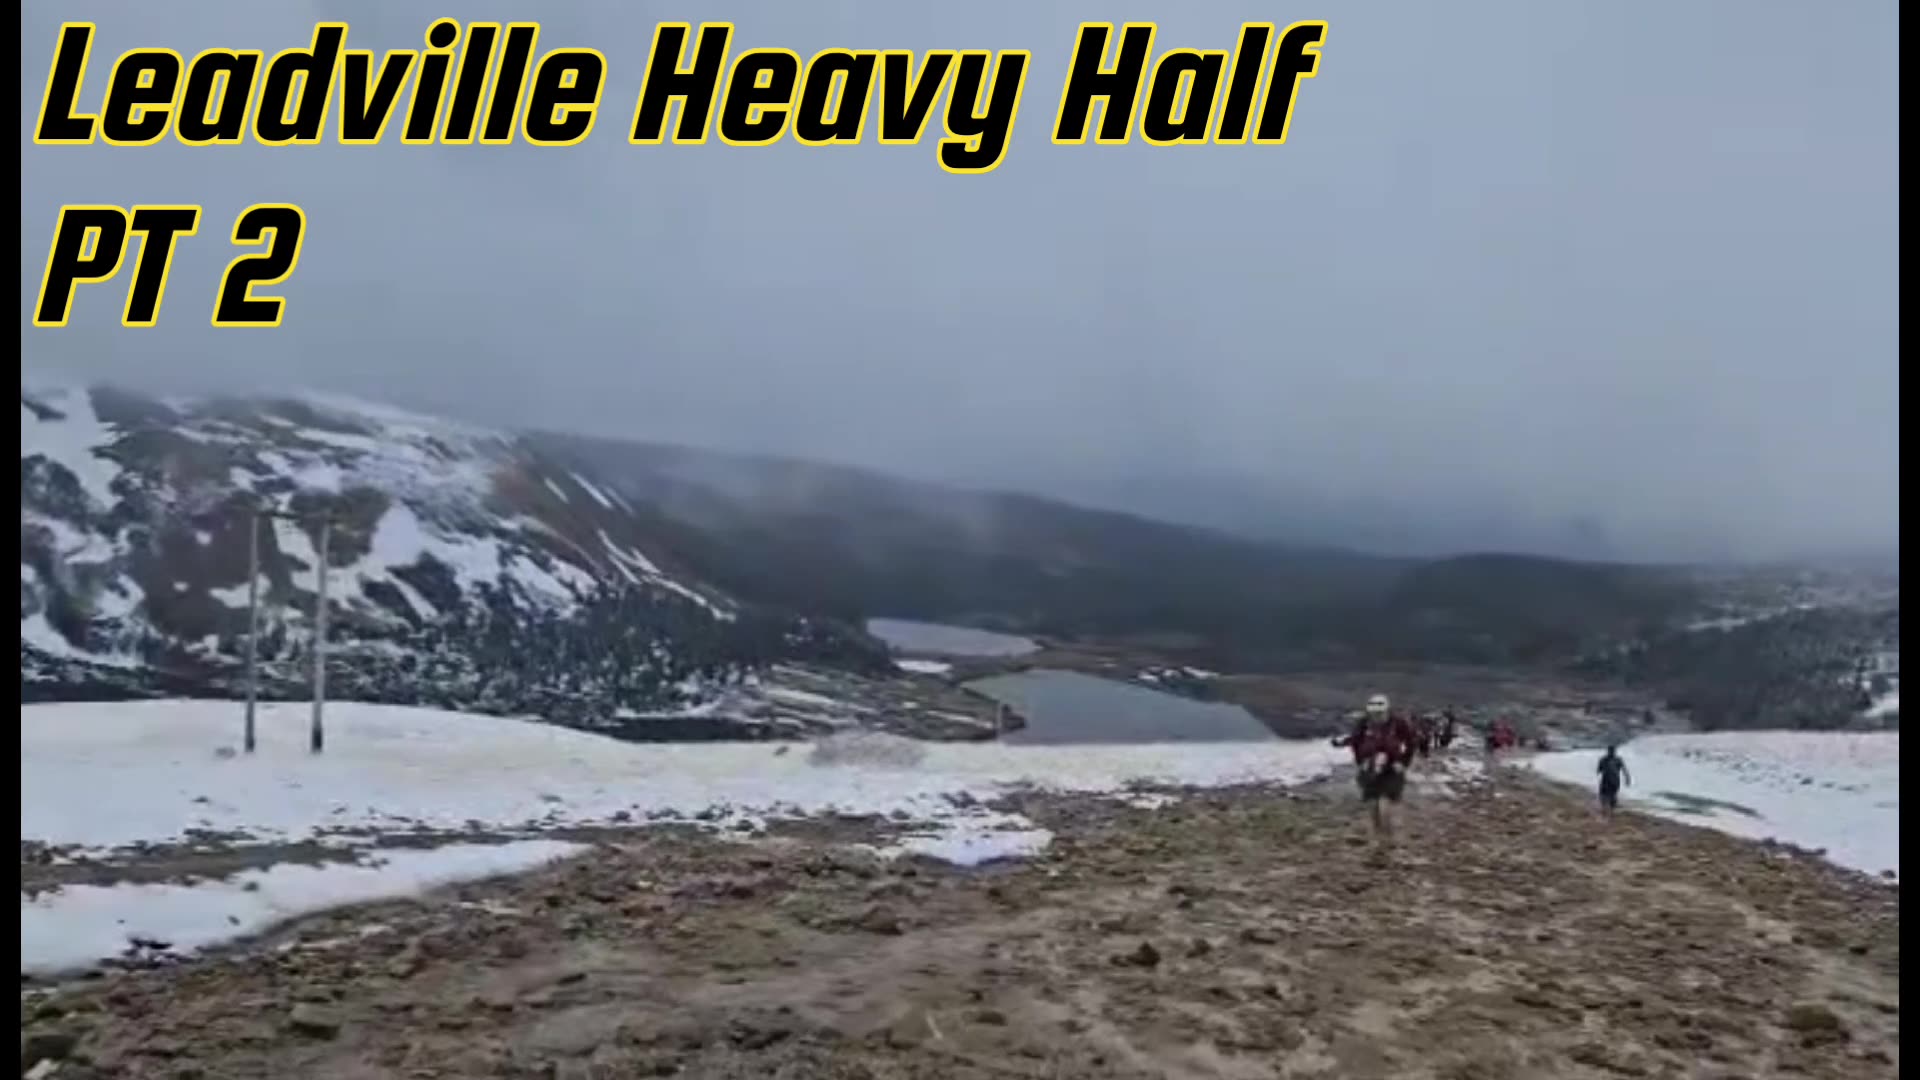 The Leadville Heavy Half Part 2